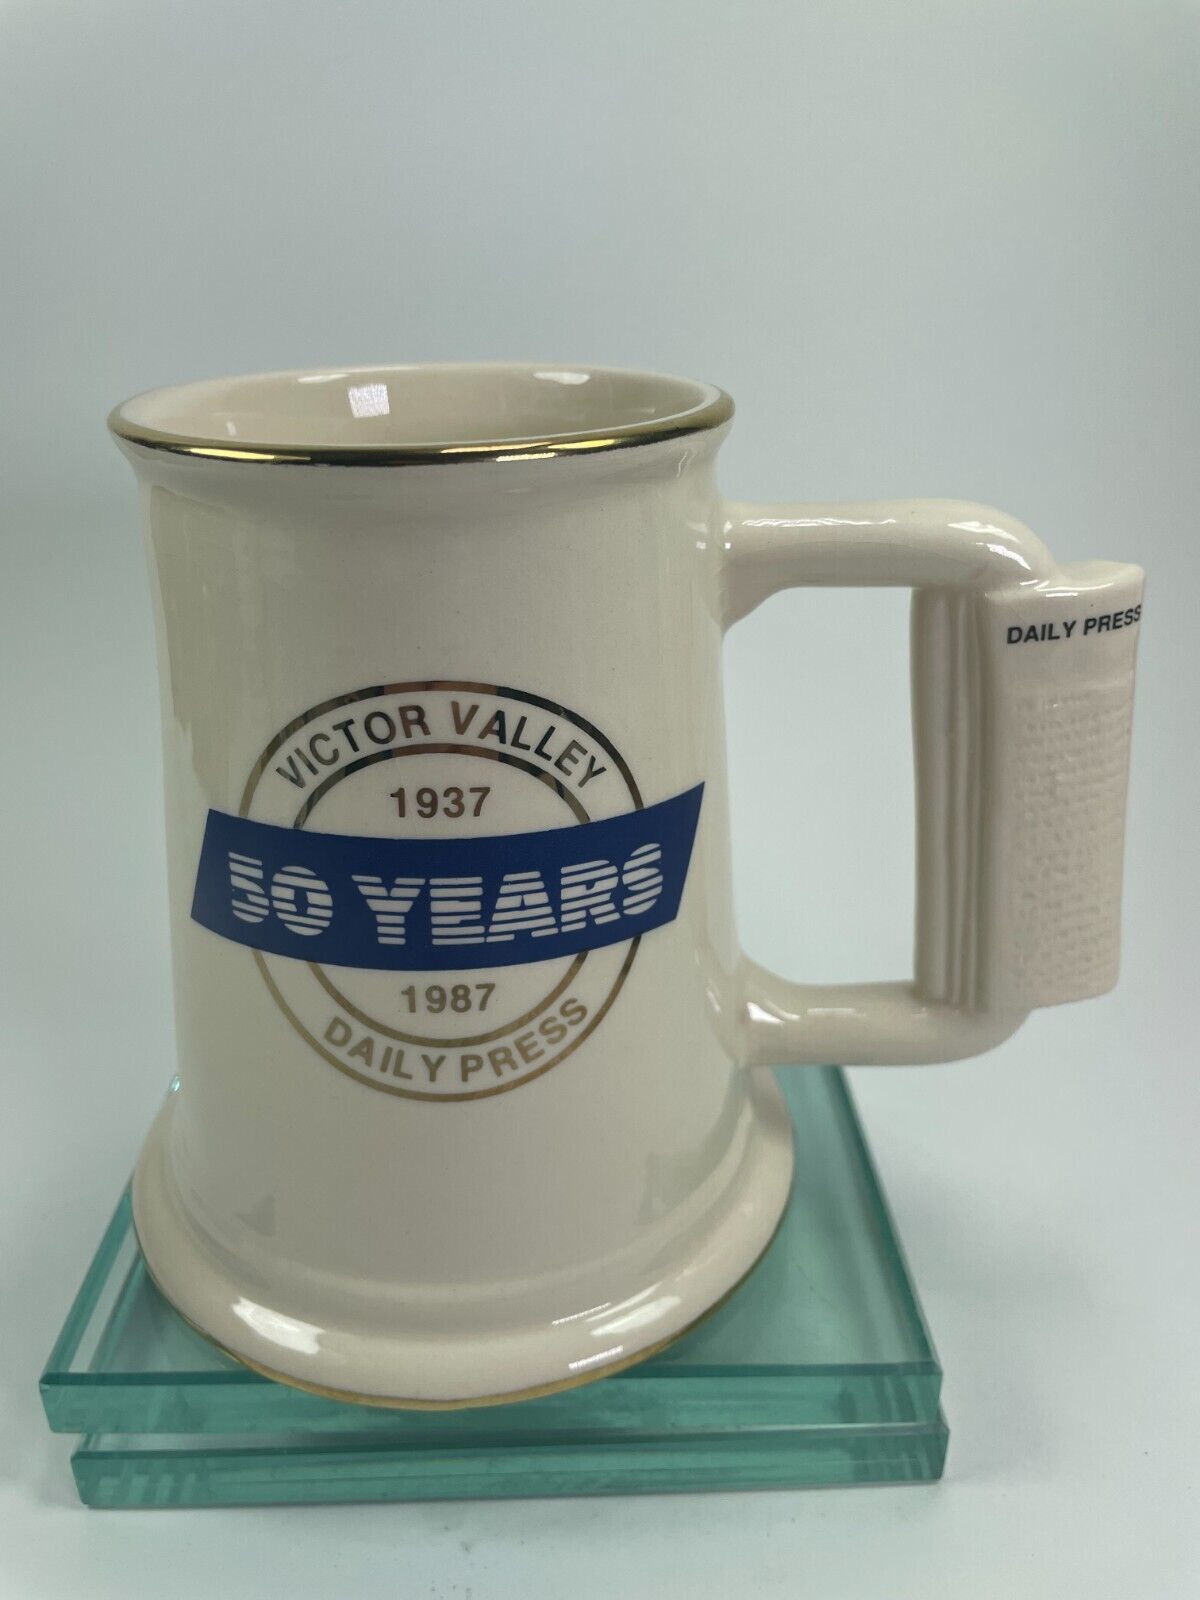 Victor Valley Daily Press Beer Stein Mug 1937-1987 50 Years Souvenir Rare CupC94